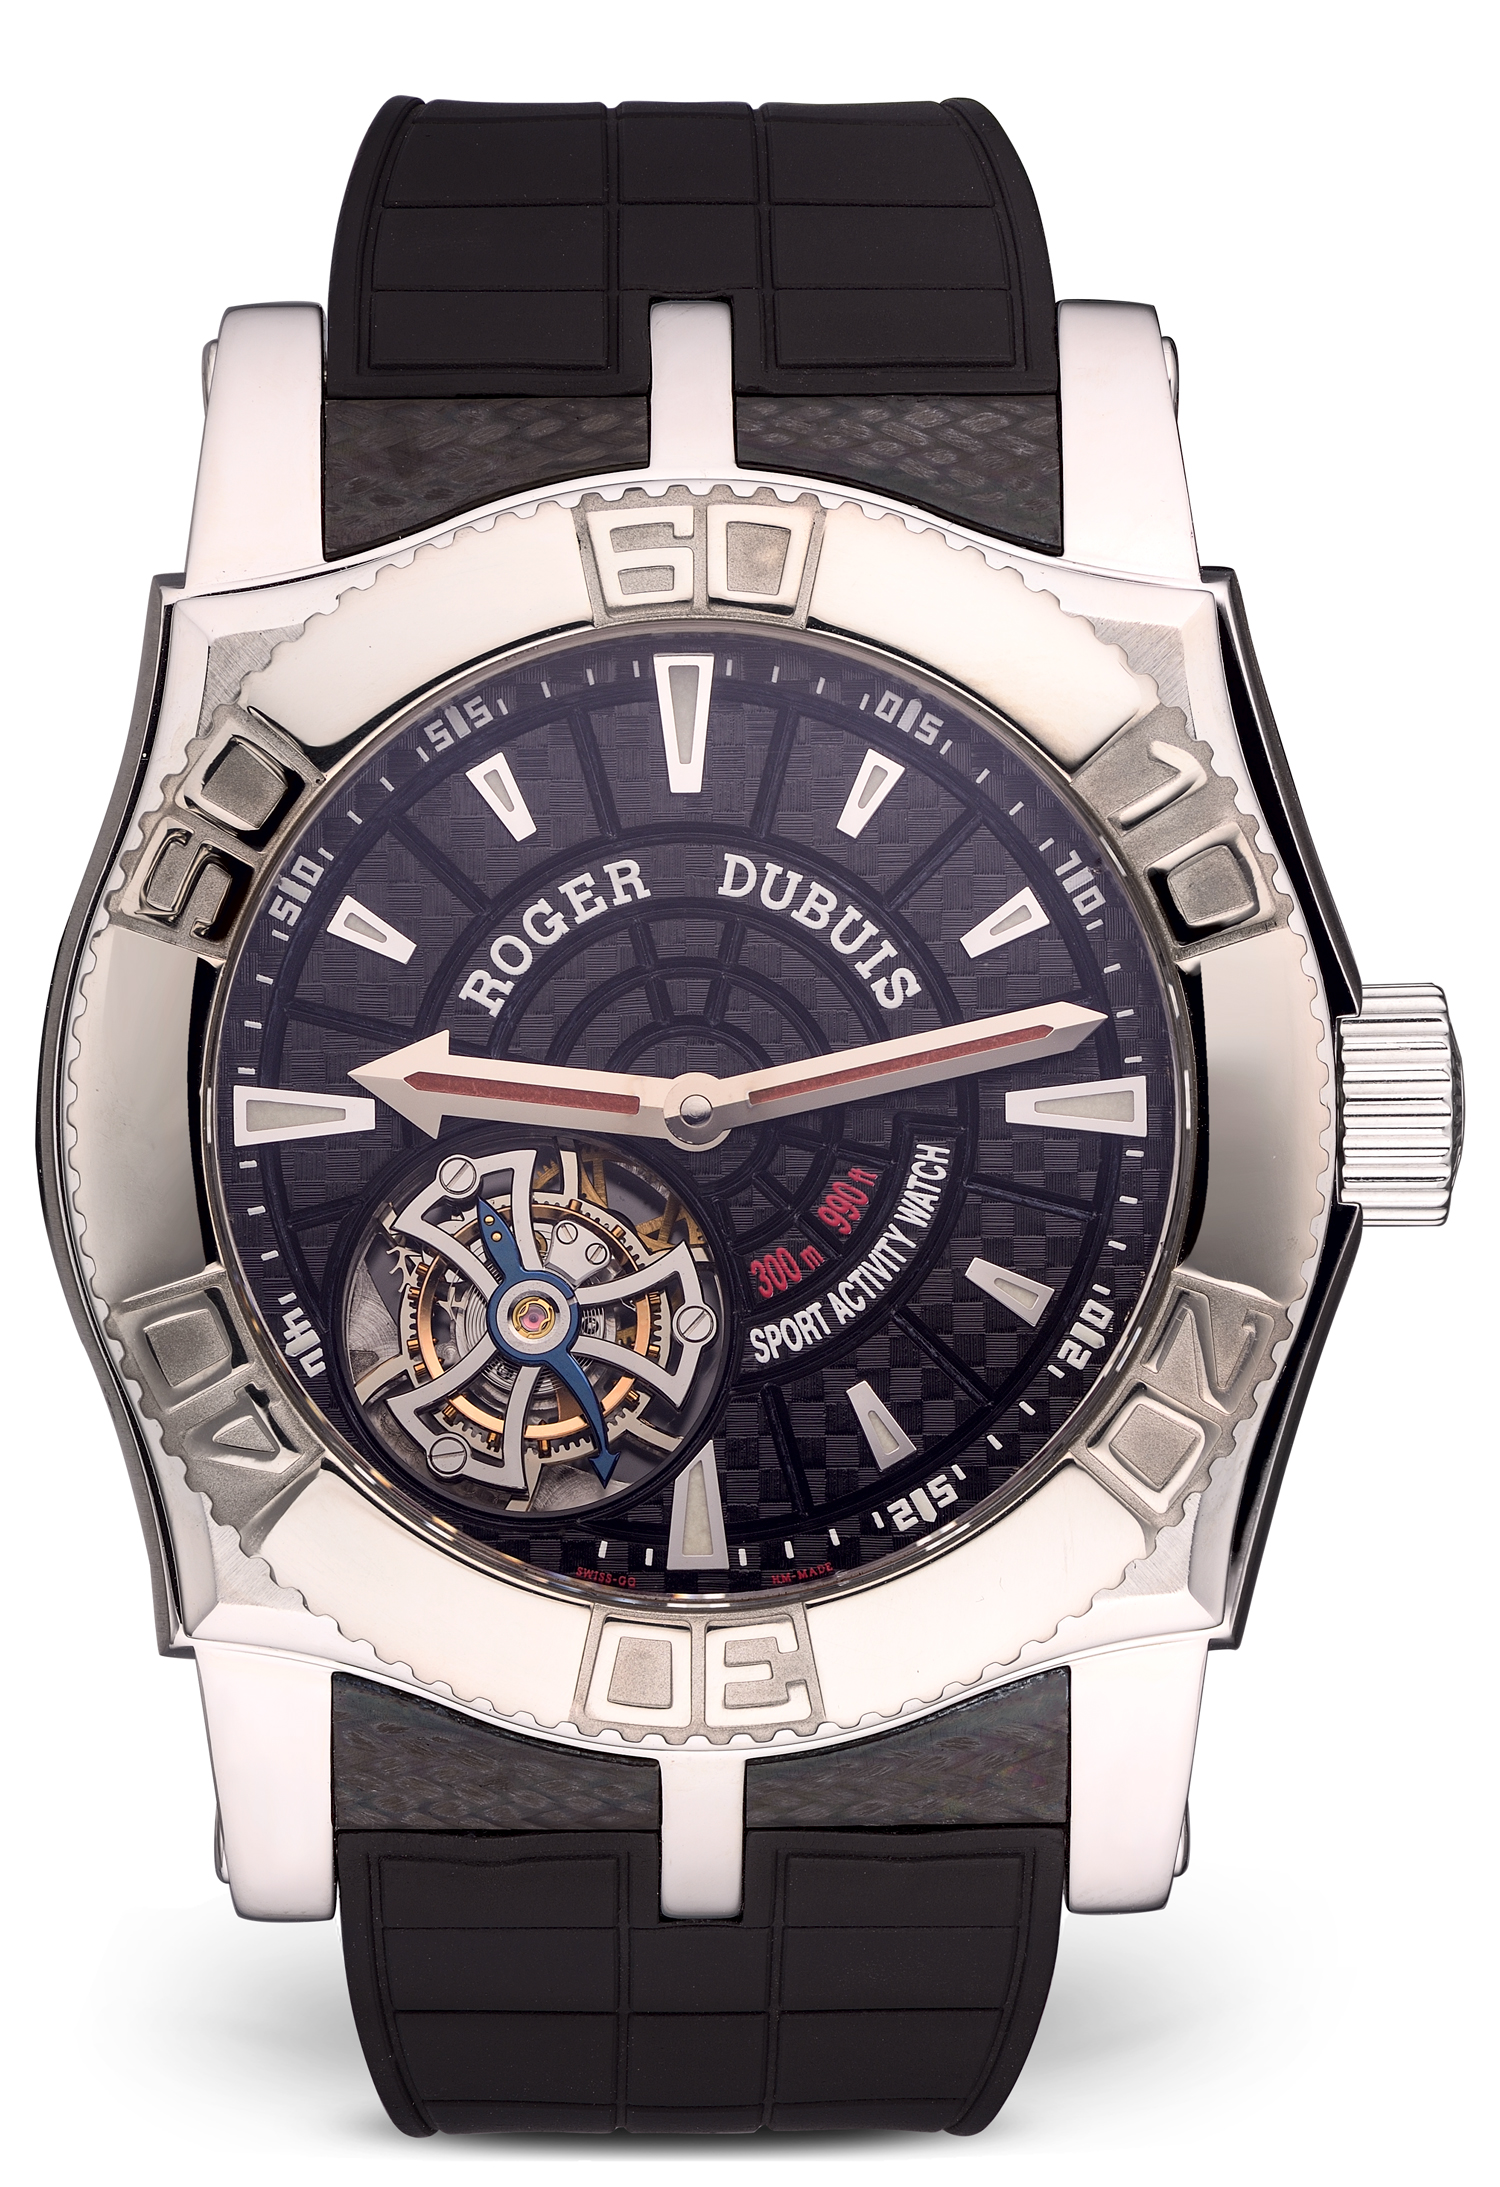 Roger Dubuis Easy Diver Tourbillon SE48 029 53